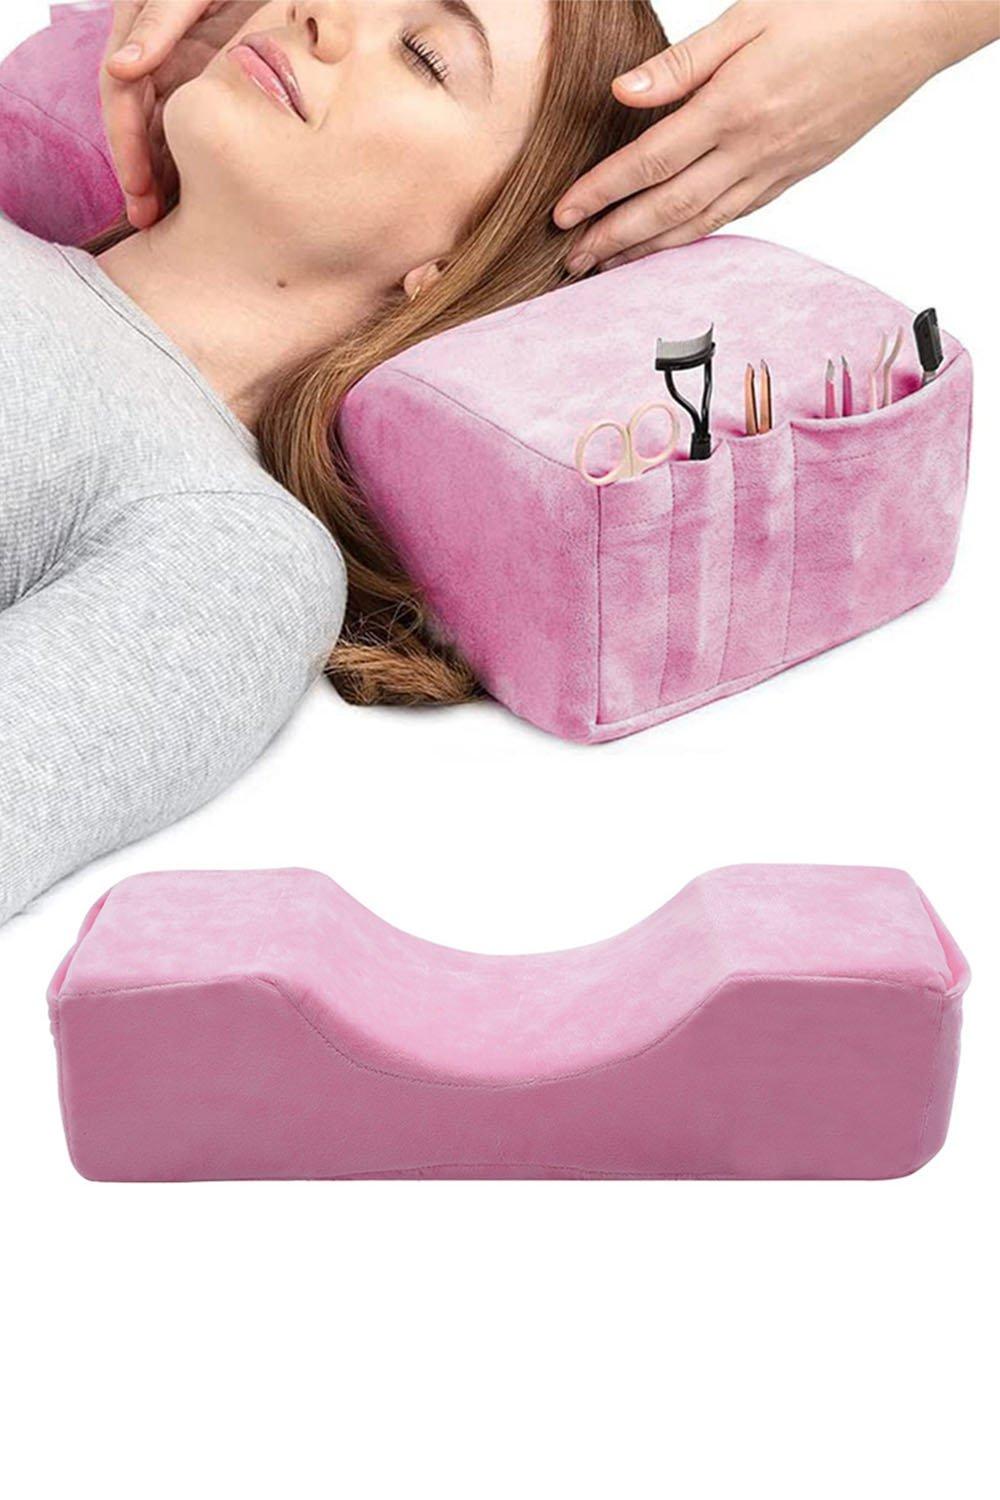 Beauty Salon Eyelash Extension Neck U-shaped Pillow